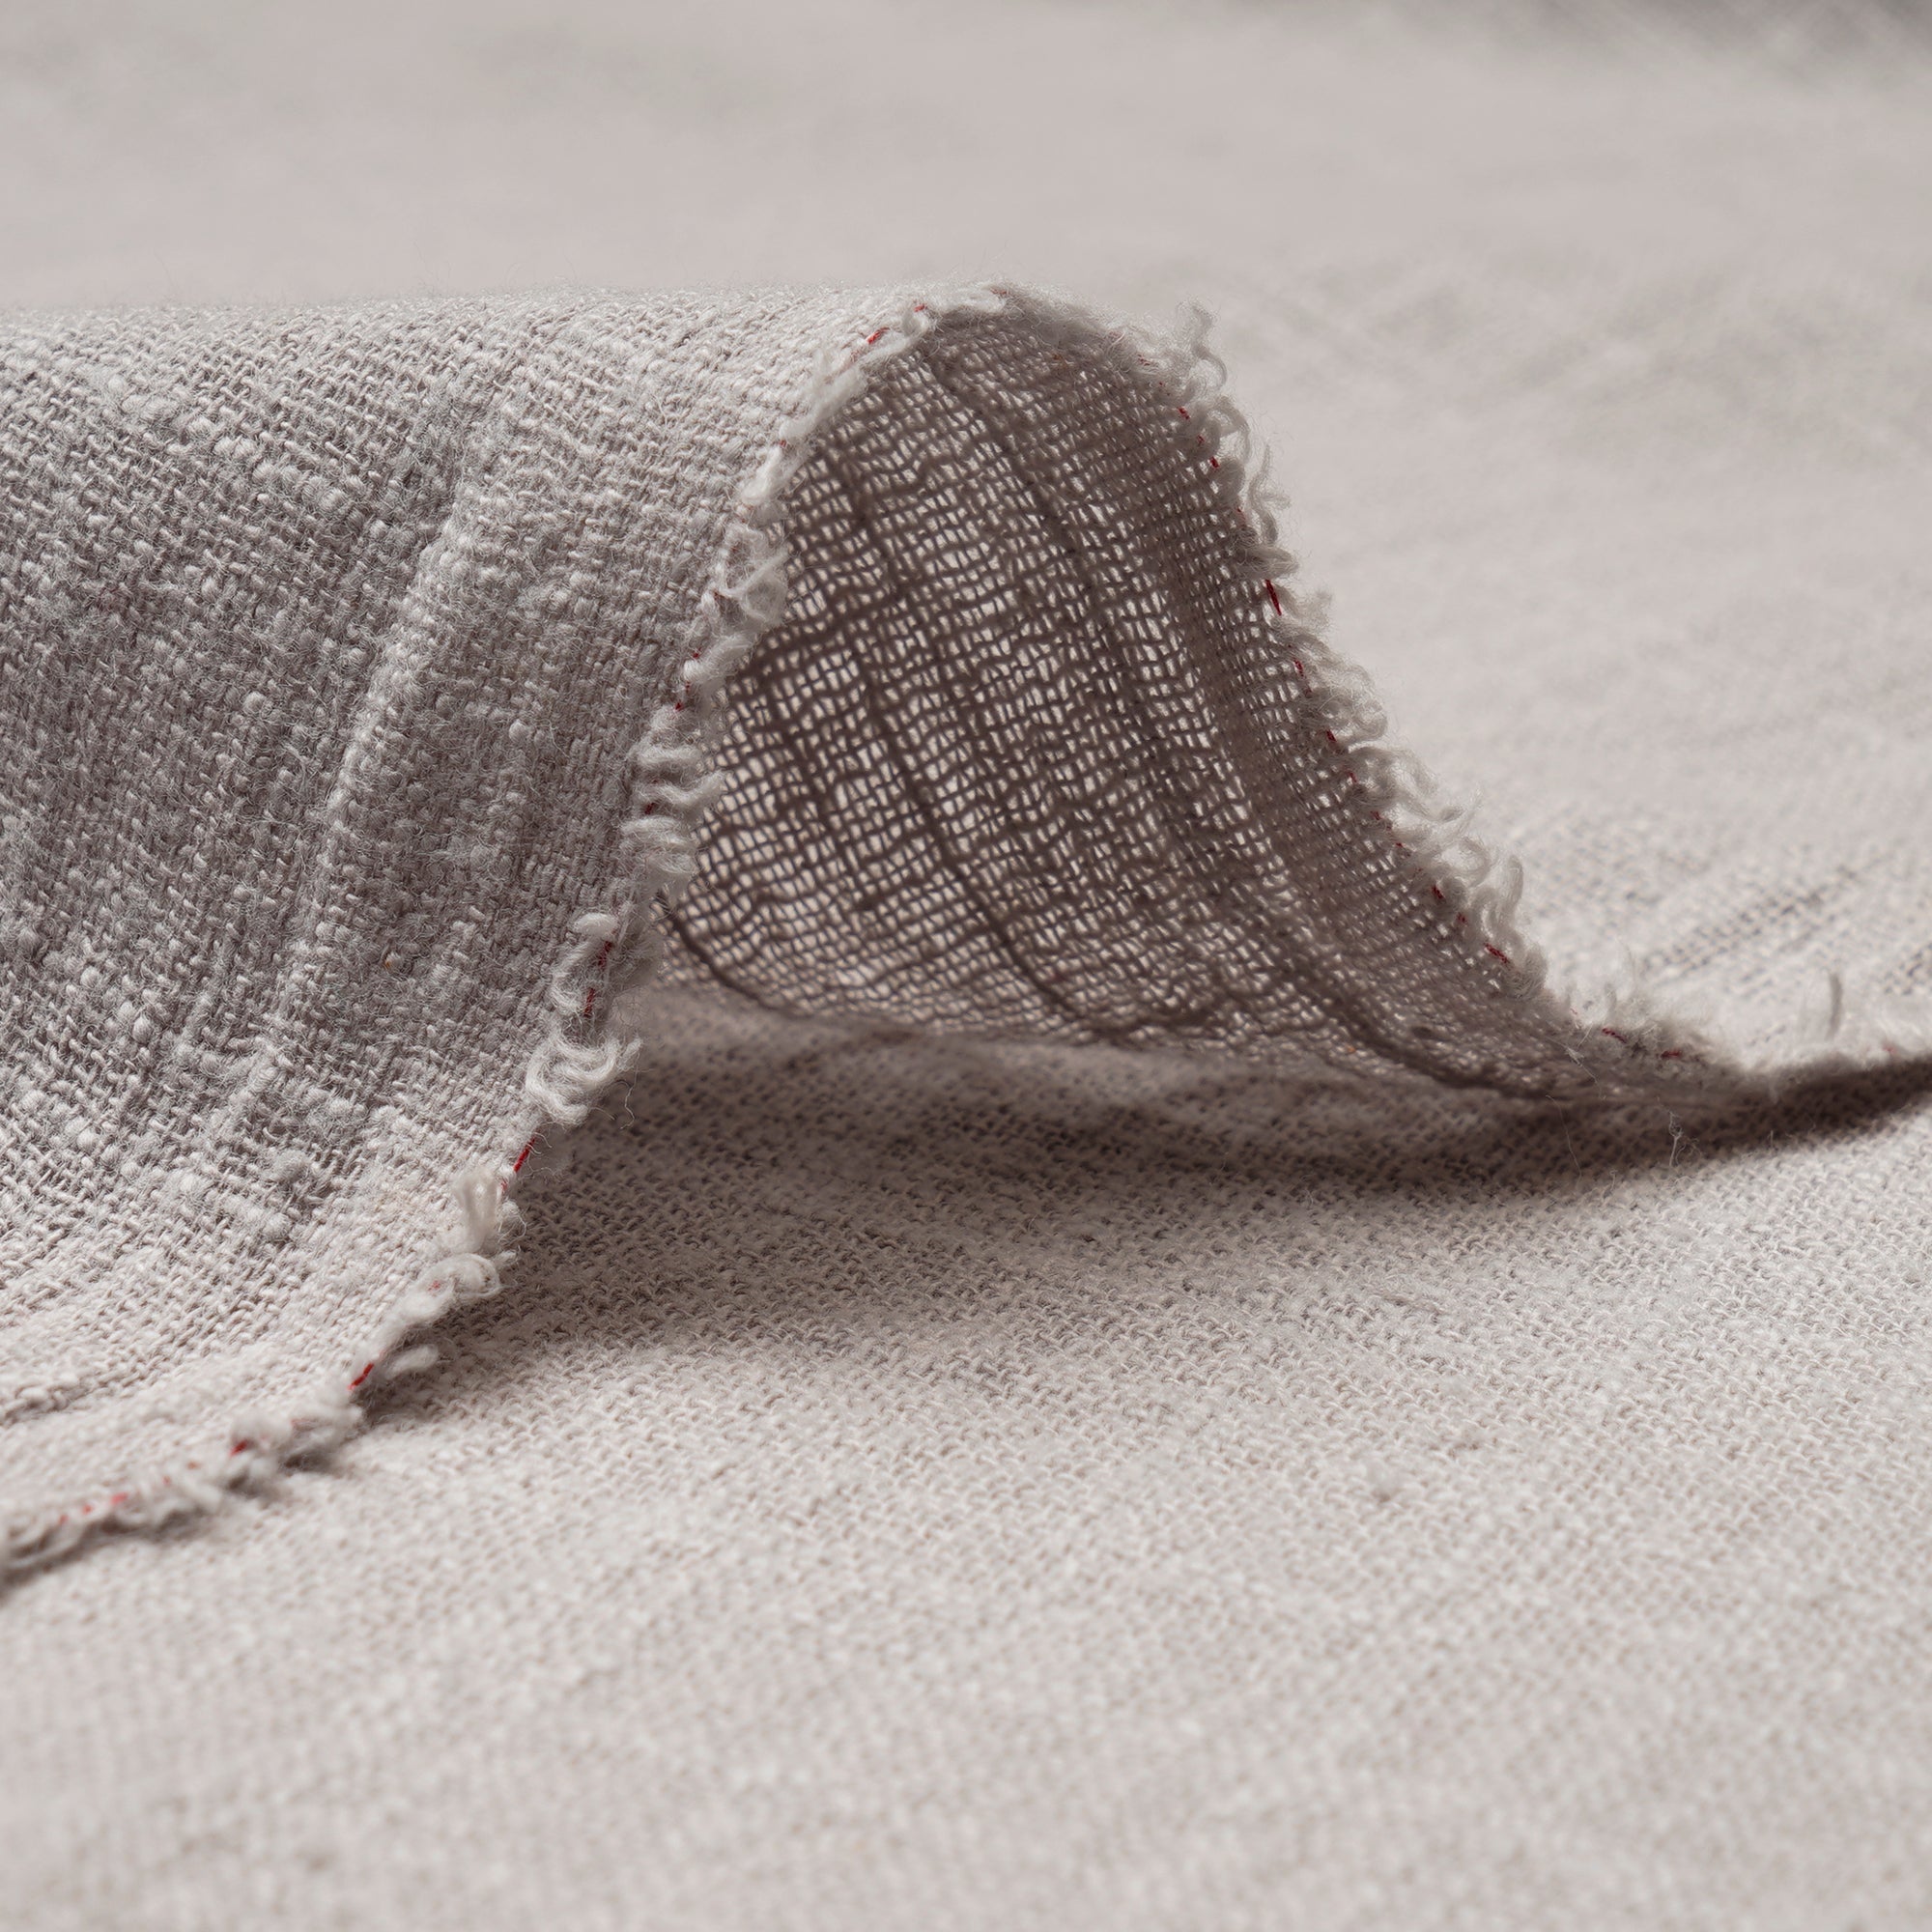 (Pre Cut 0.70 Grey Mill Dyed Cotton Viscose Slub Fabric